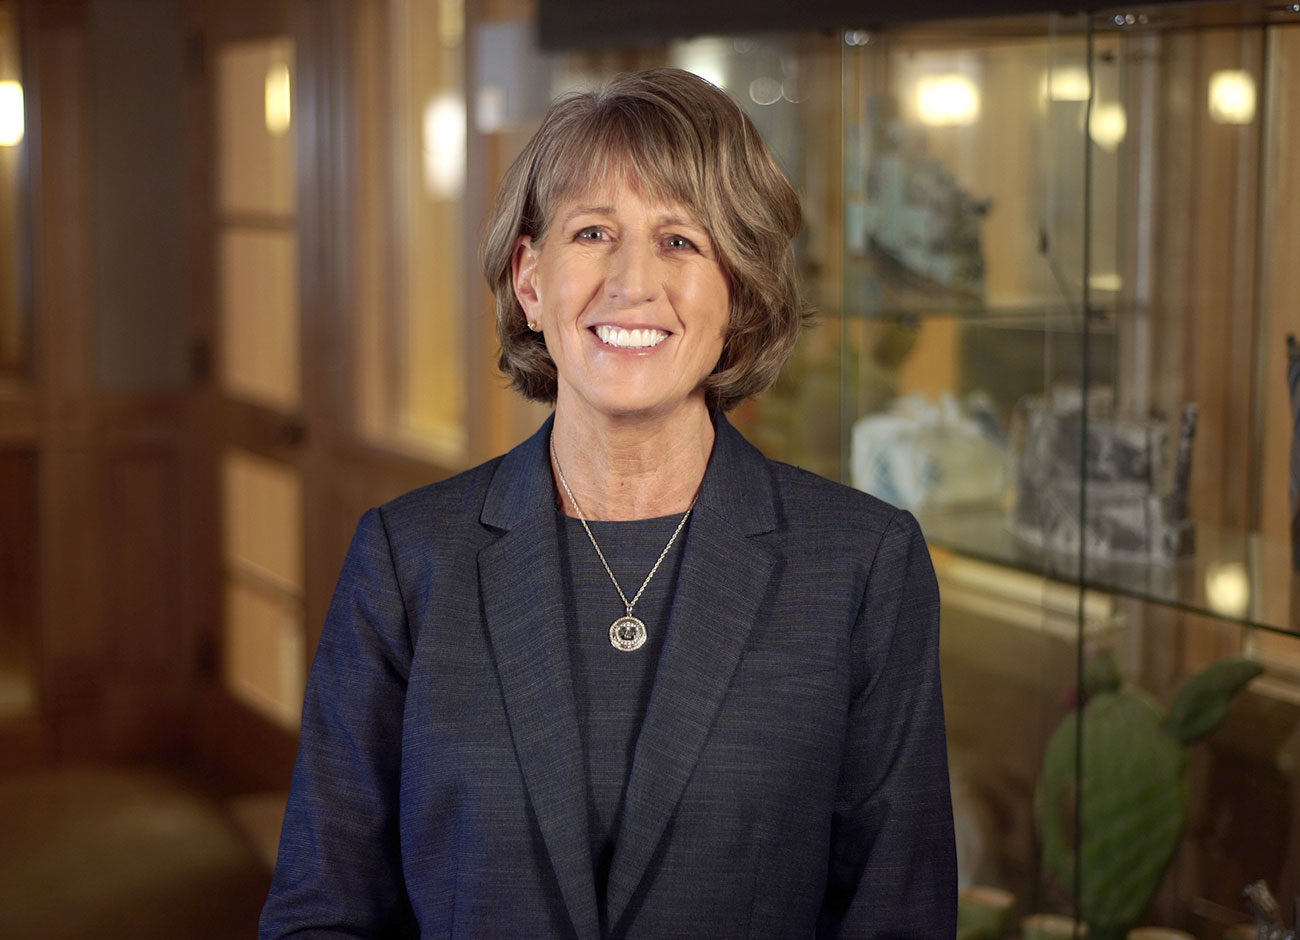 A smiling USU President Noelle Cockett in her office.